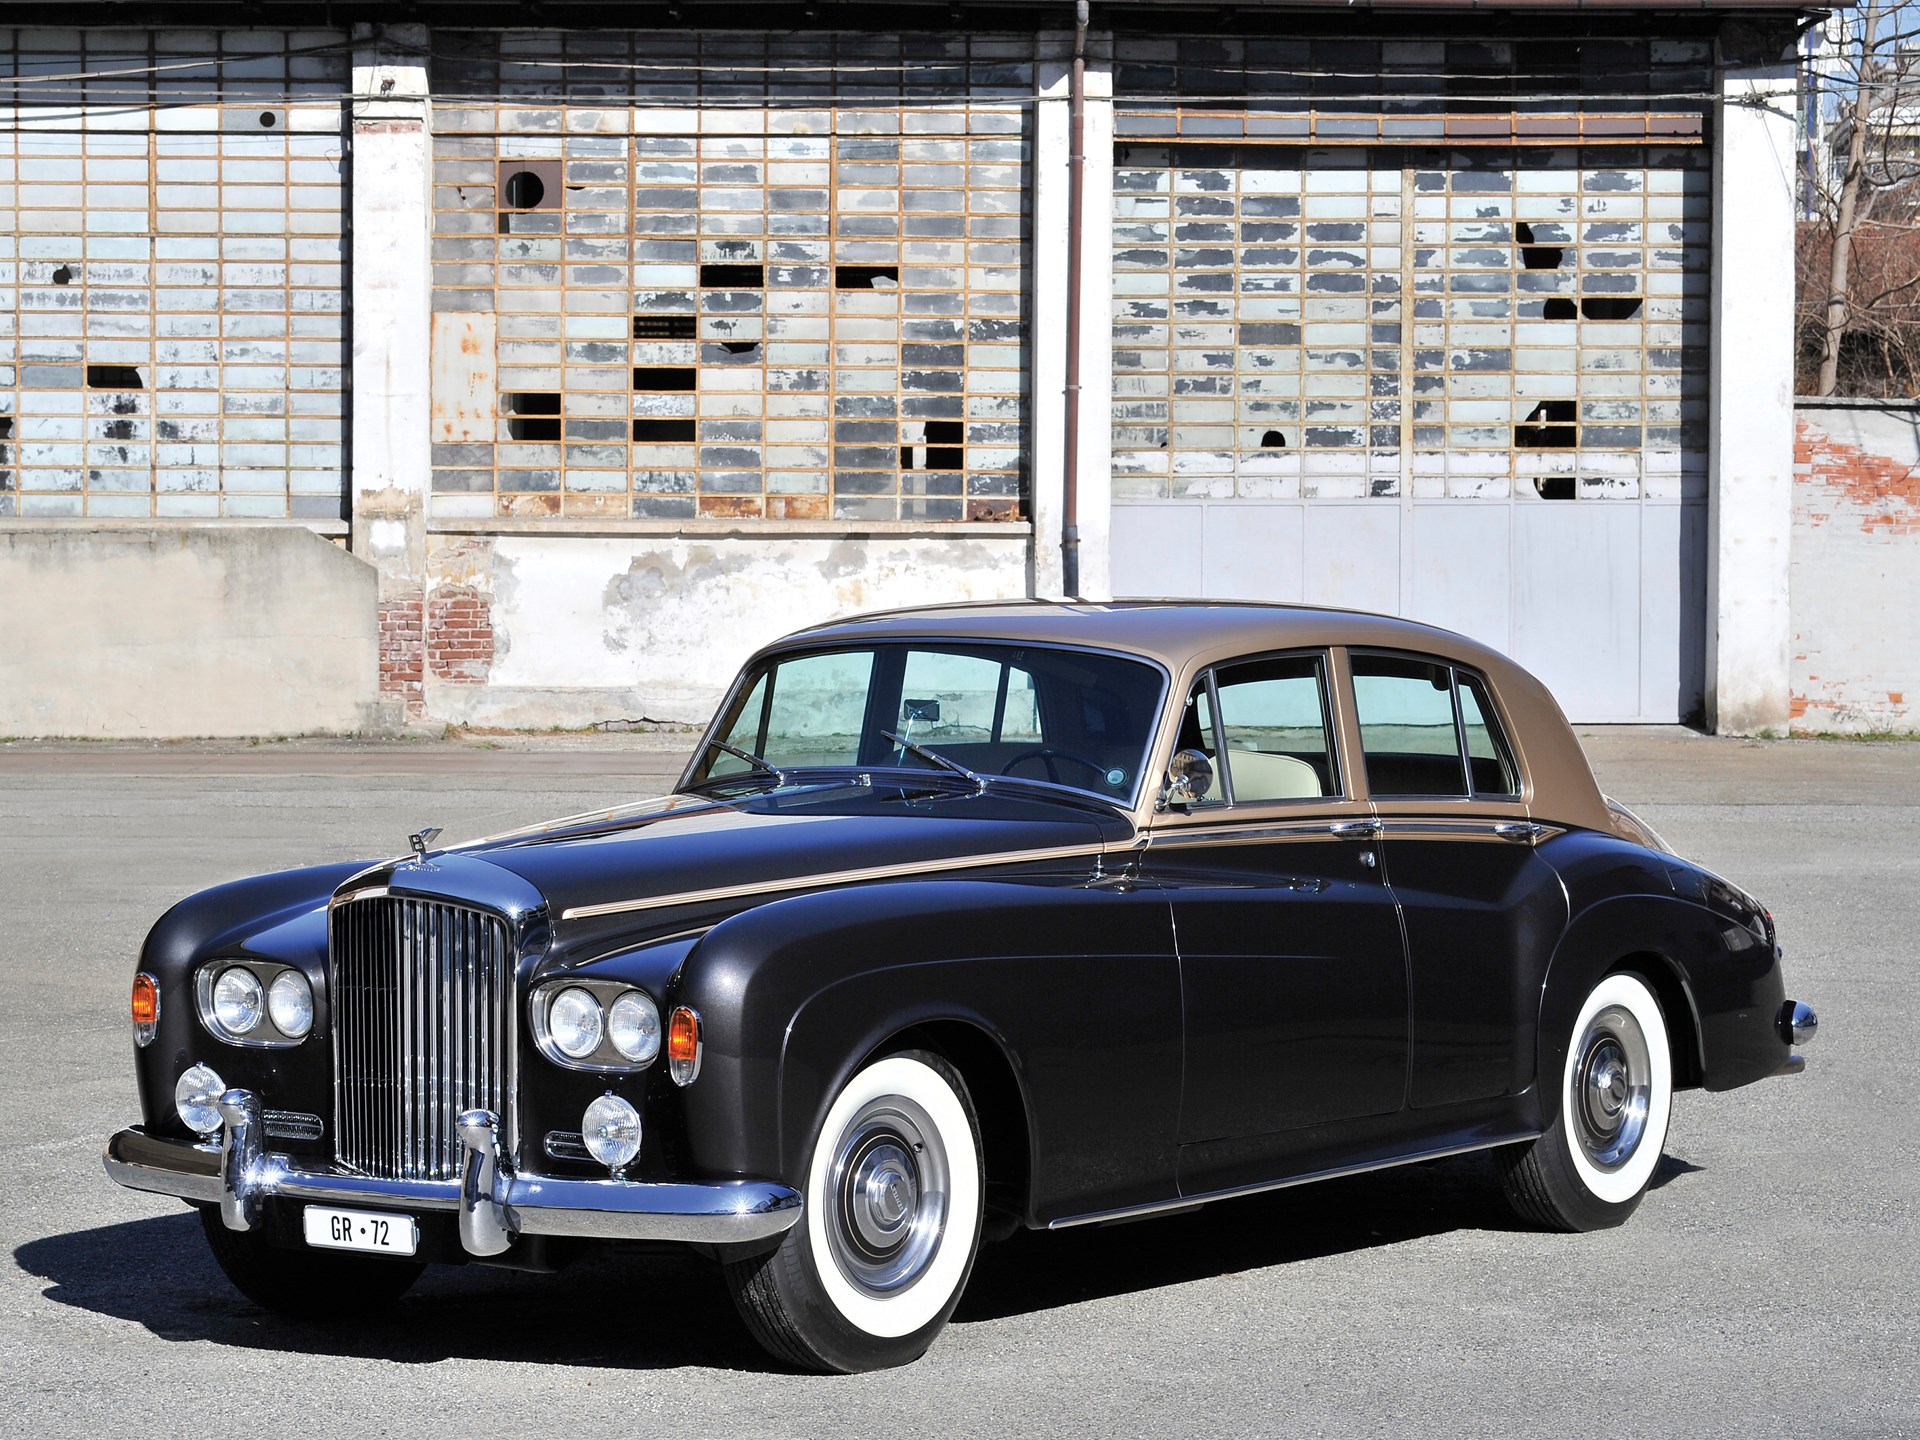 1963 Bentley S3 Saloon | Monaco 2016 | RM Sotheby's